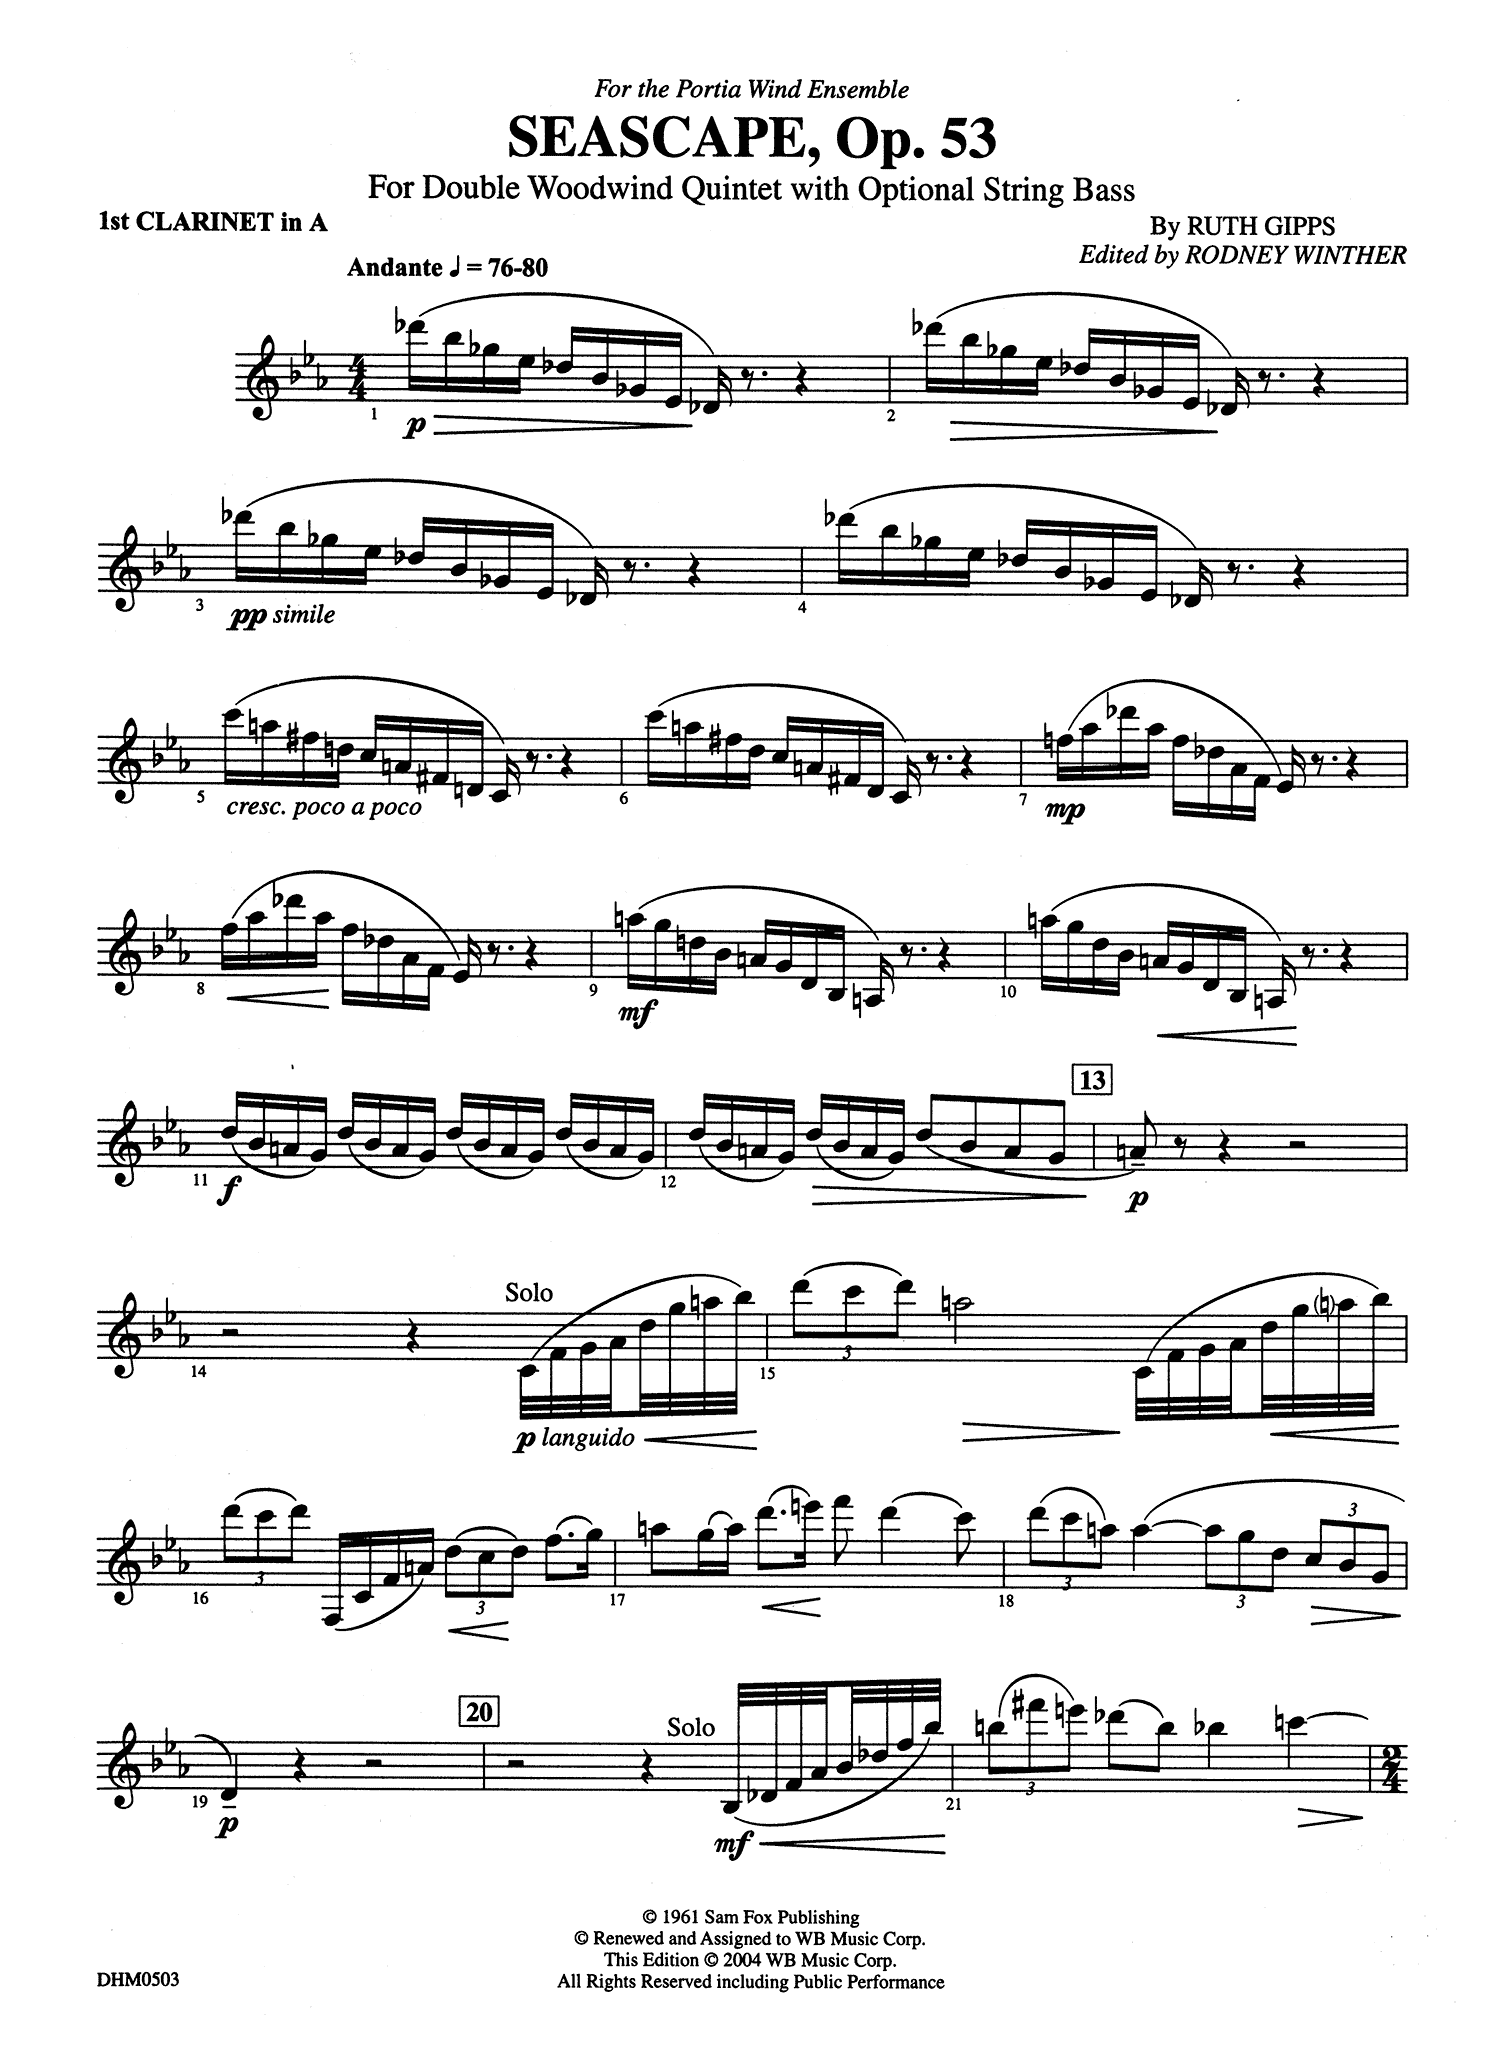 Gipps Seascape, Op. 53 double wind quintet clarinet part